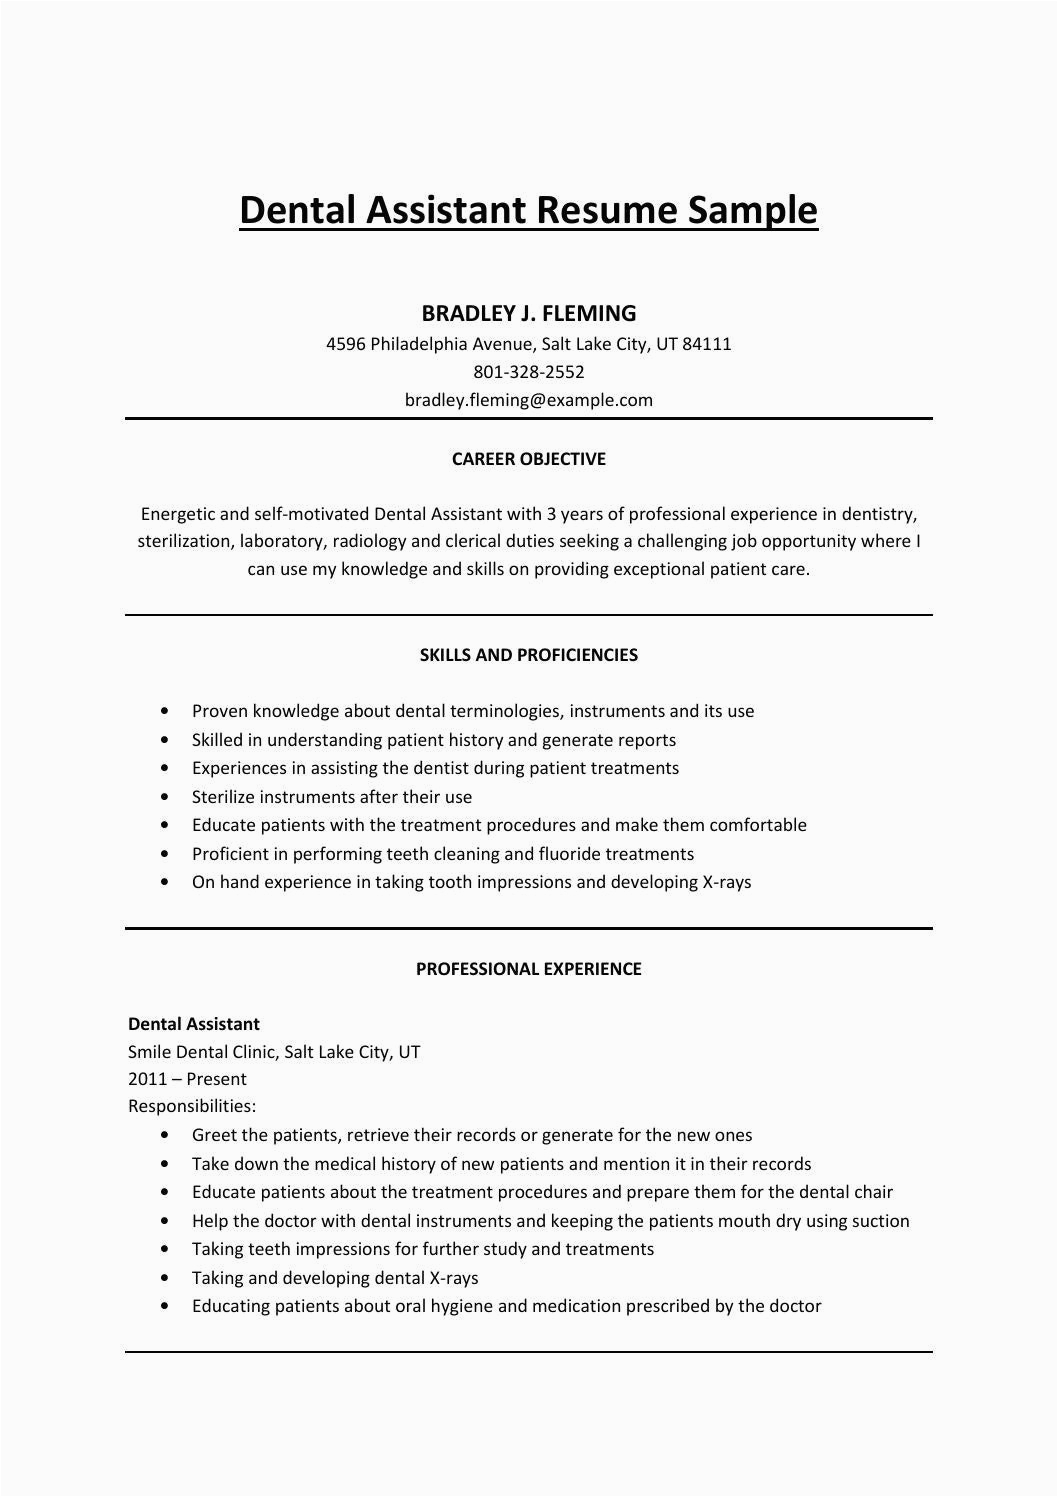 Sample Of Resume for Dental assistant Dental assistant Resume Sample by Mark Stone issuu